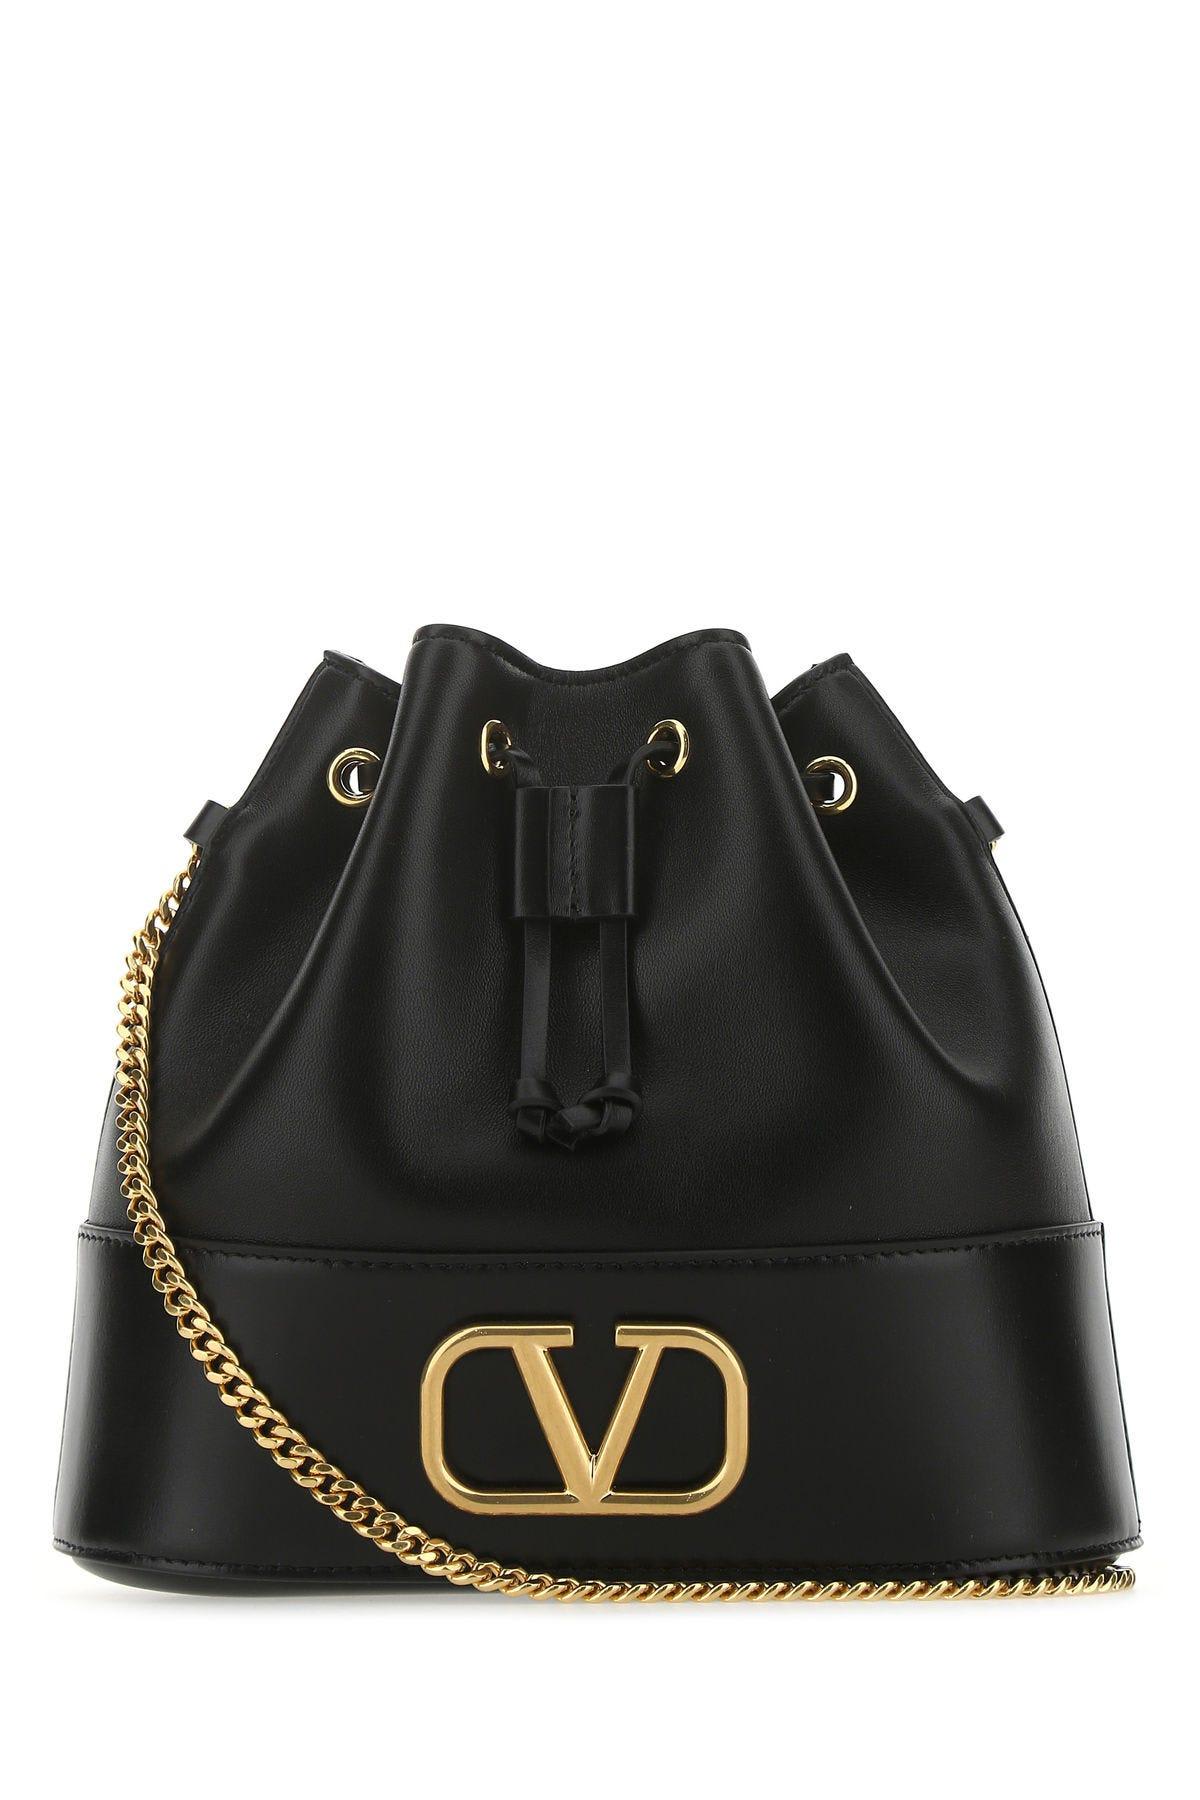 Valentino Garavani Black Leather Bucket Bag